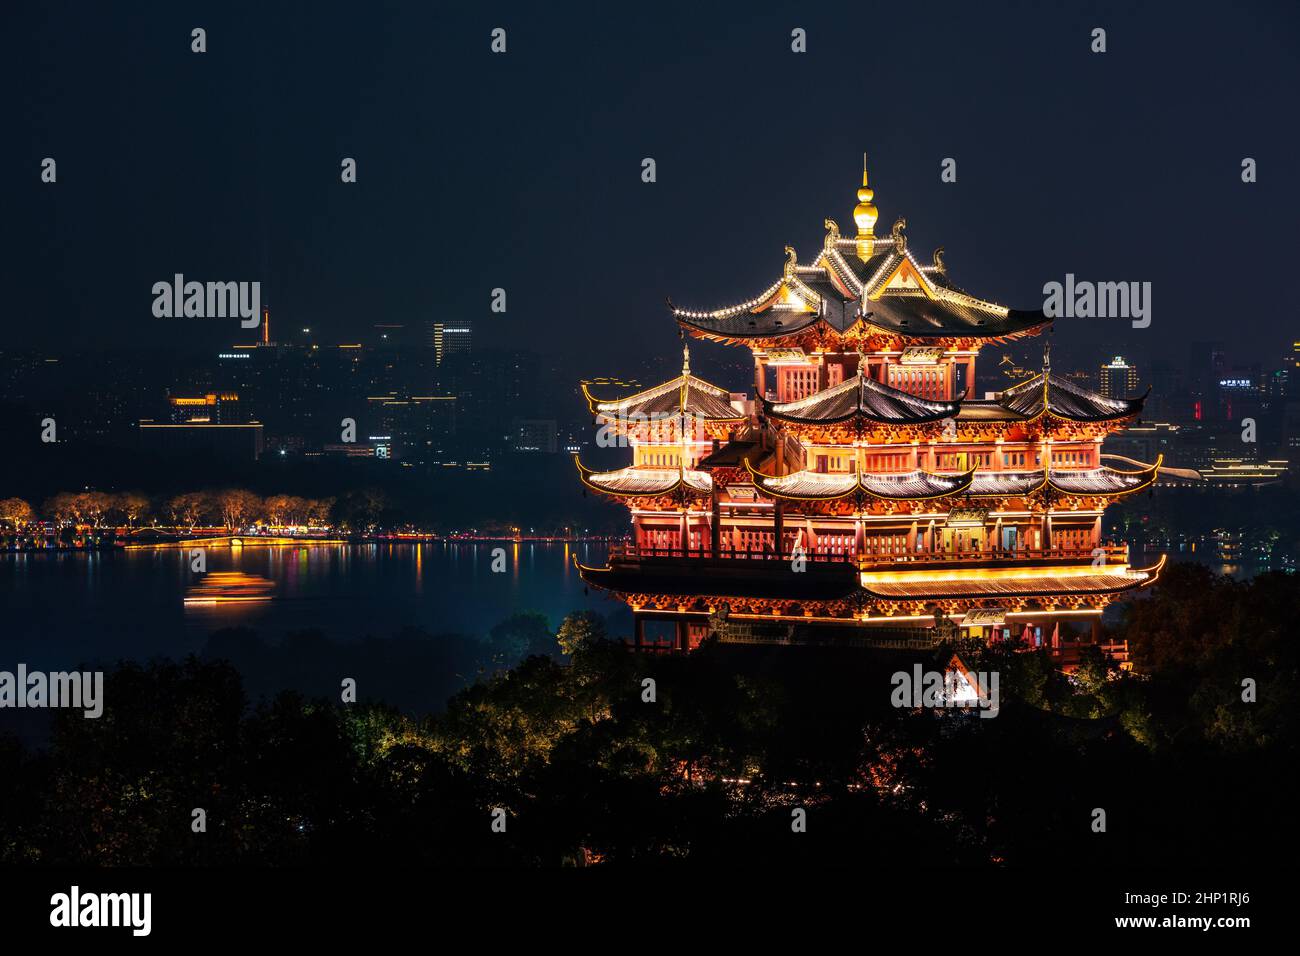 Night view of illuminated Cheng Huang Ge (City God Pavillion) with West Lake and city skyline on background, Hangzhou, China Stock Photo